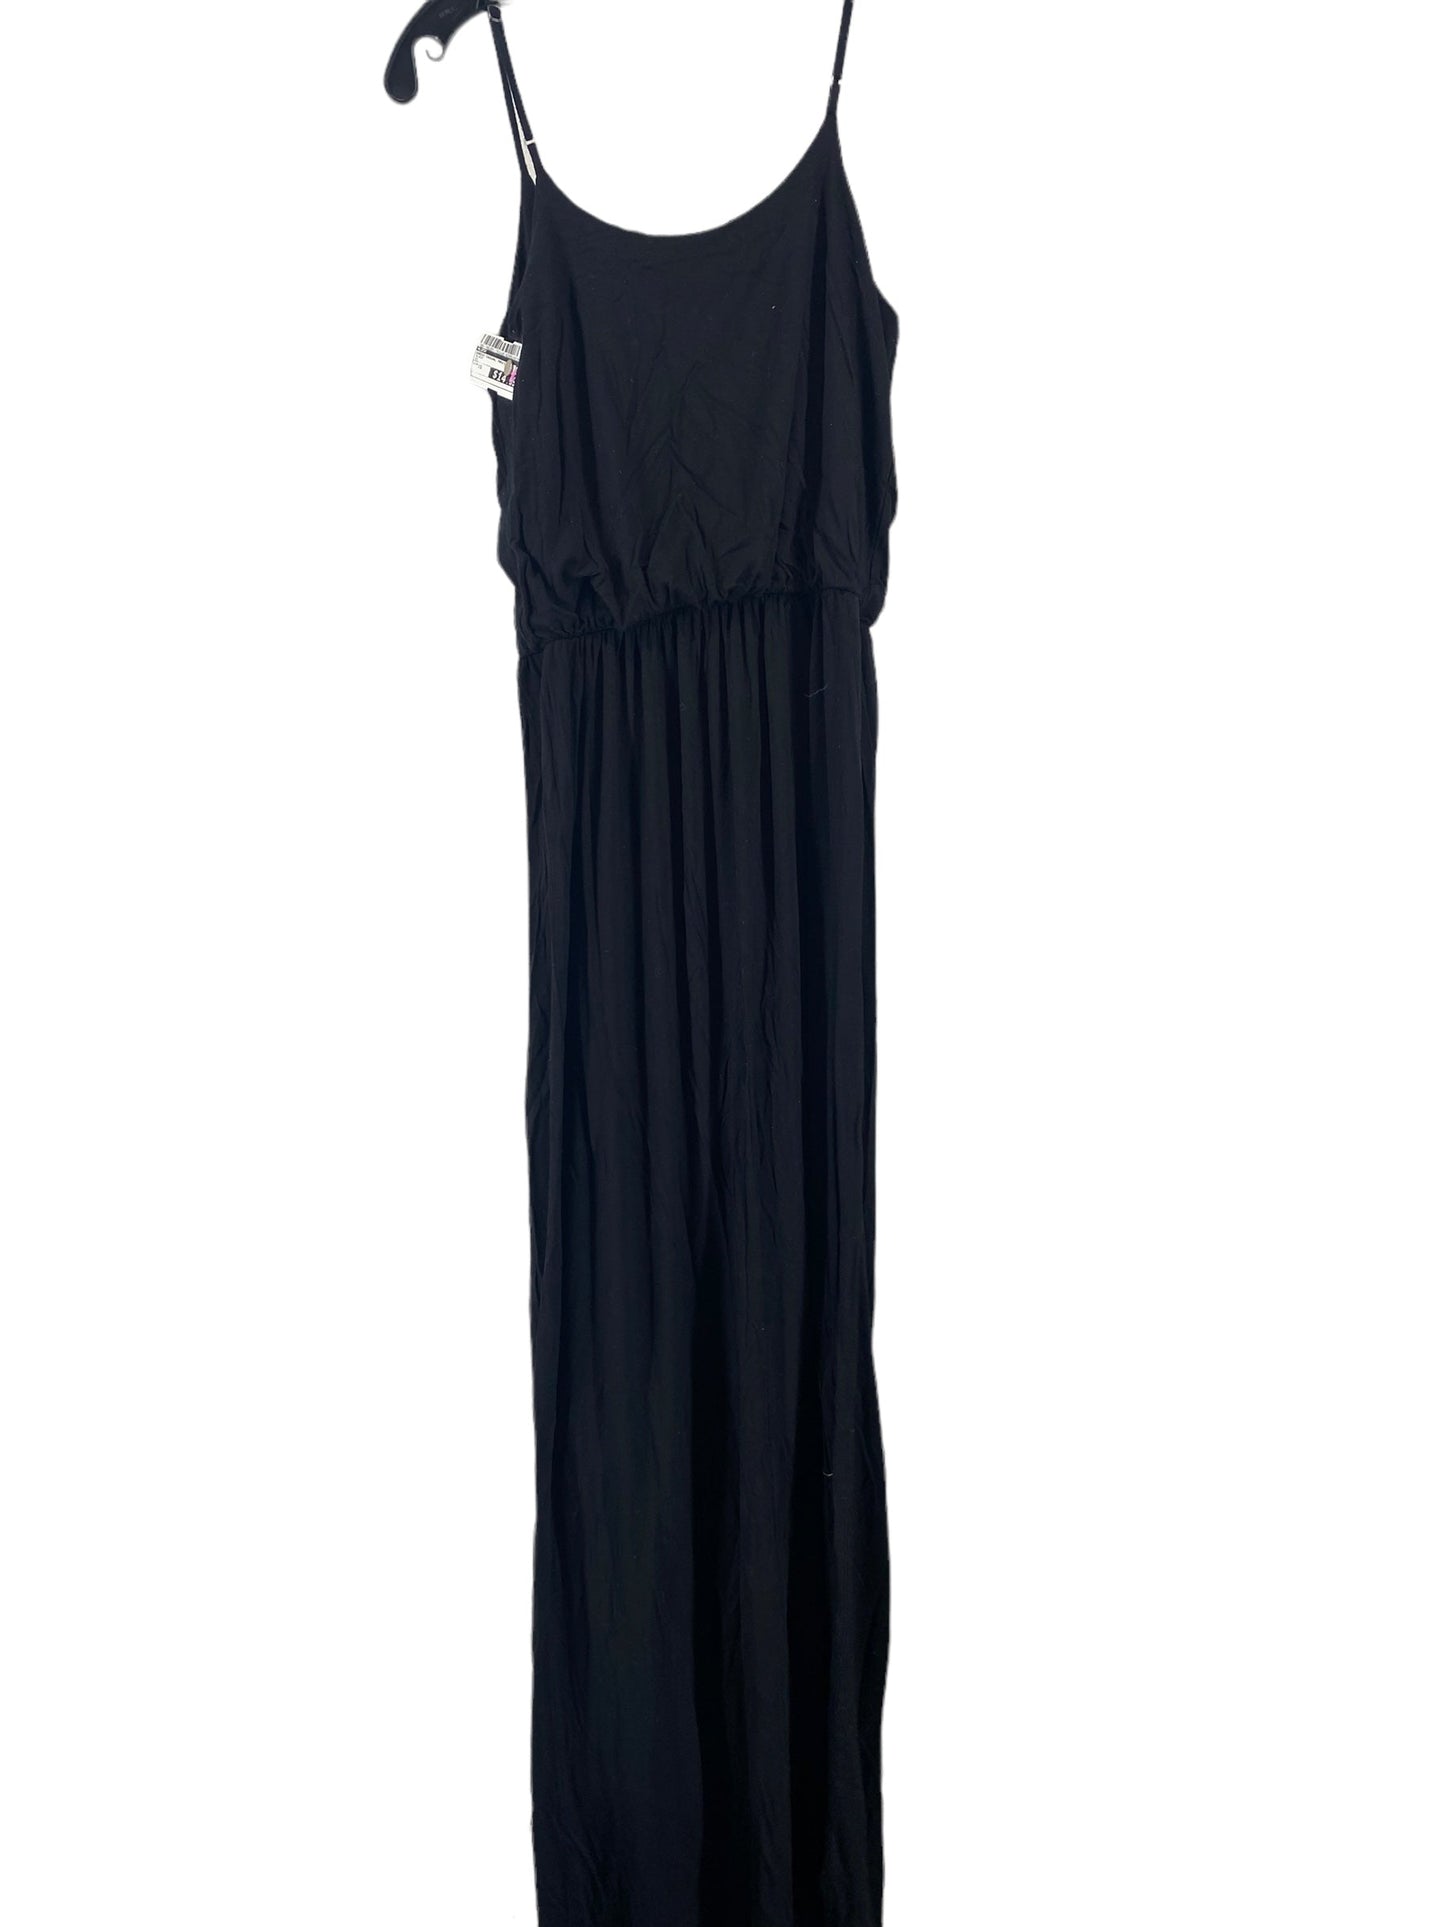 Dress Casual Maxi By Lush  Size: Xs